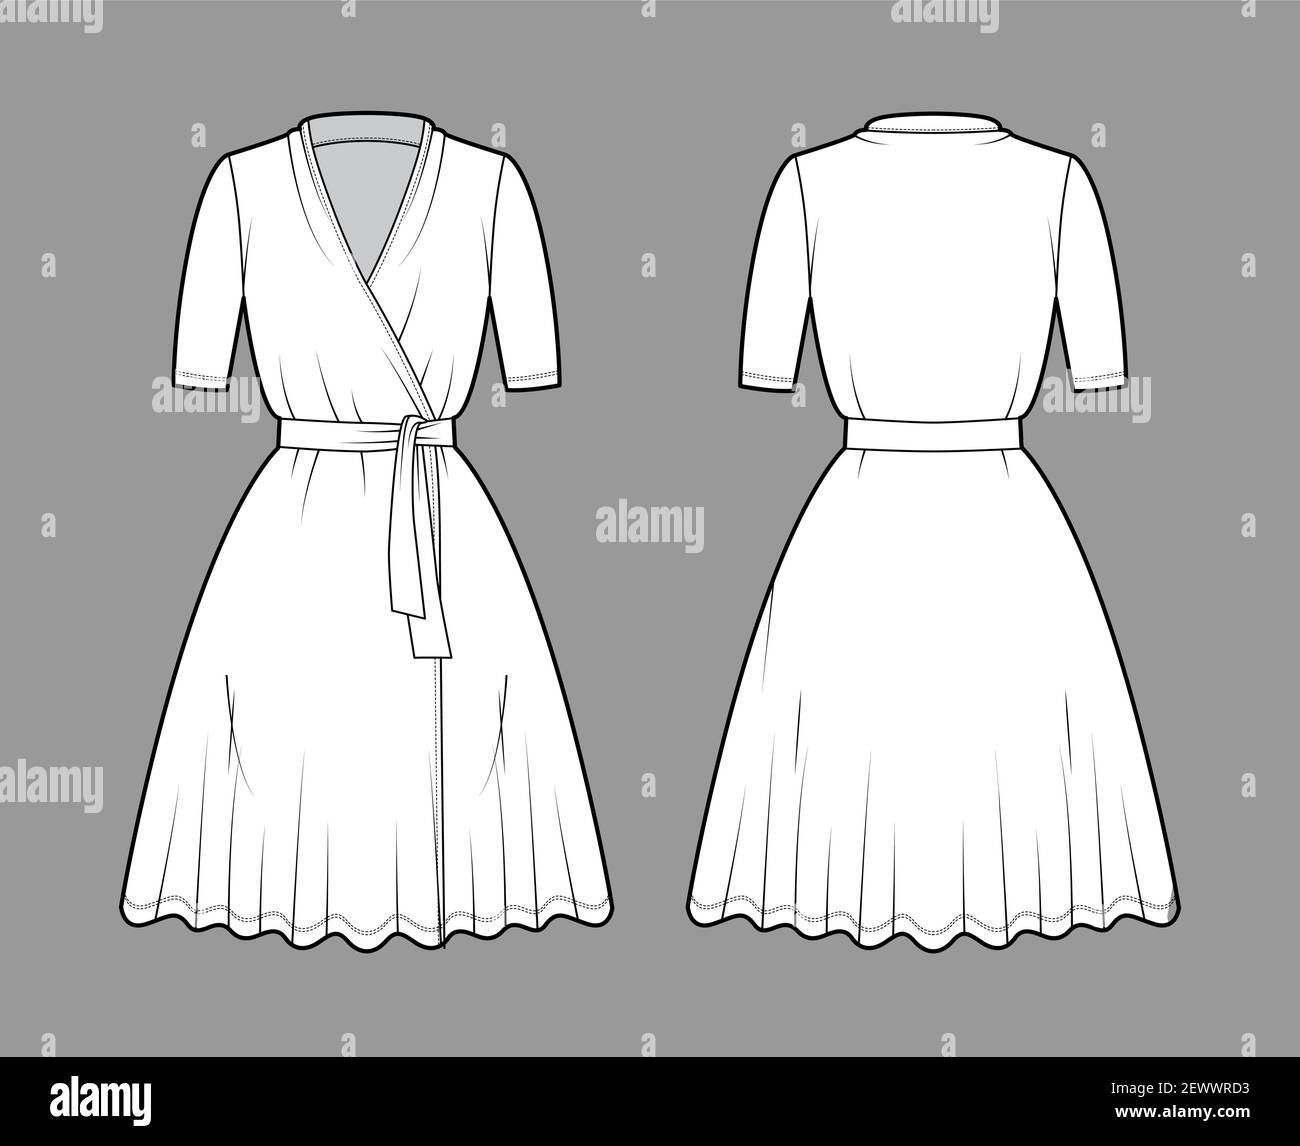 Wrap dress technical fashion illustration with deep V-neck, short ...